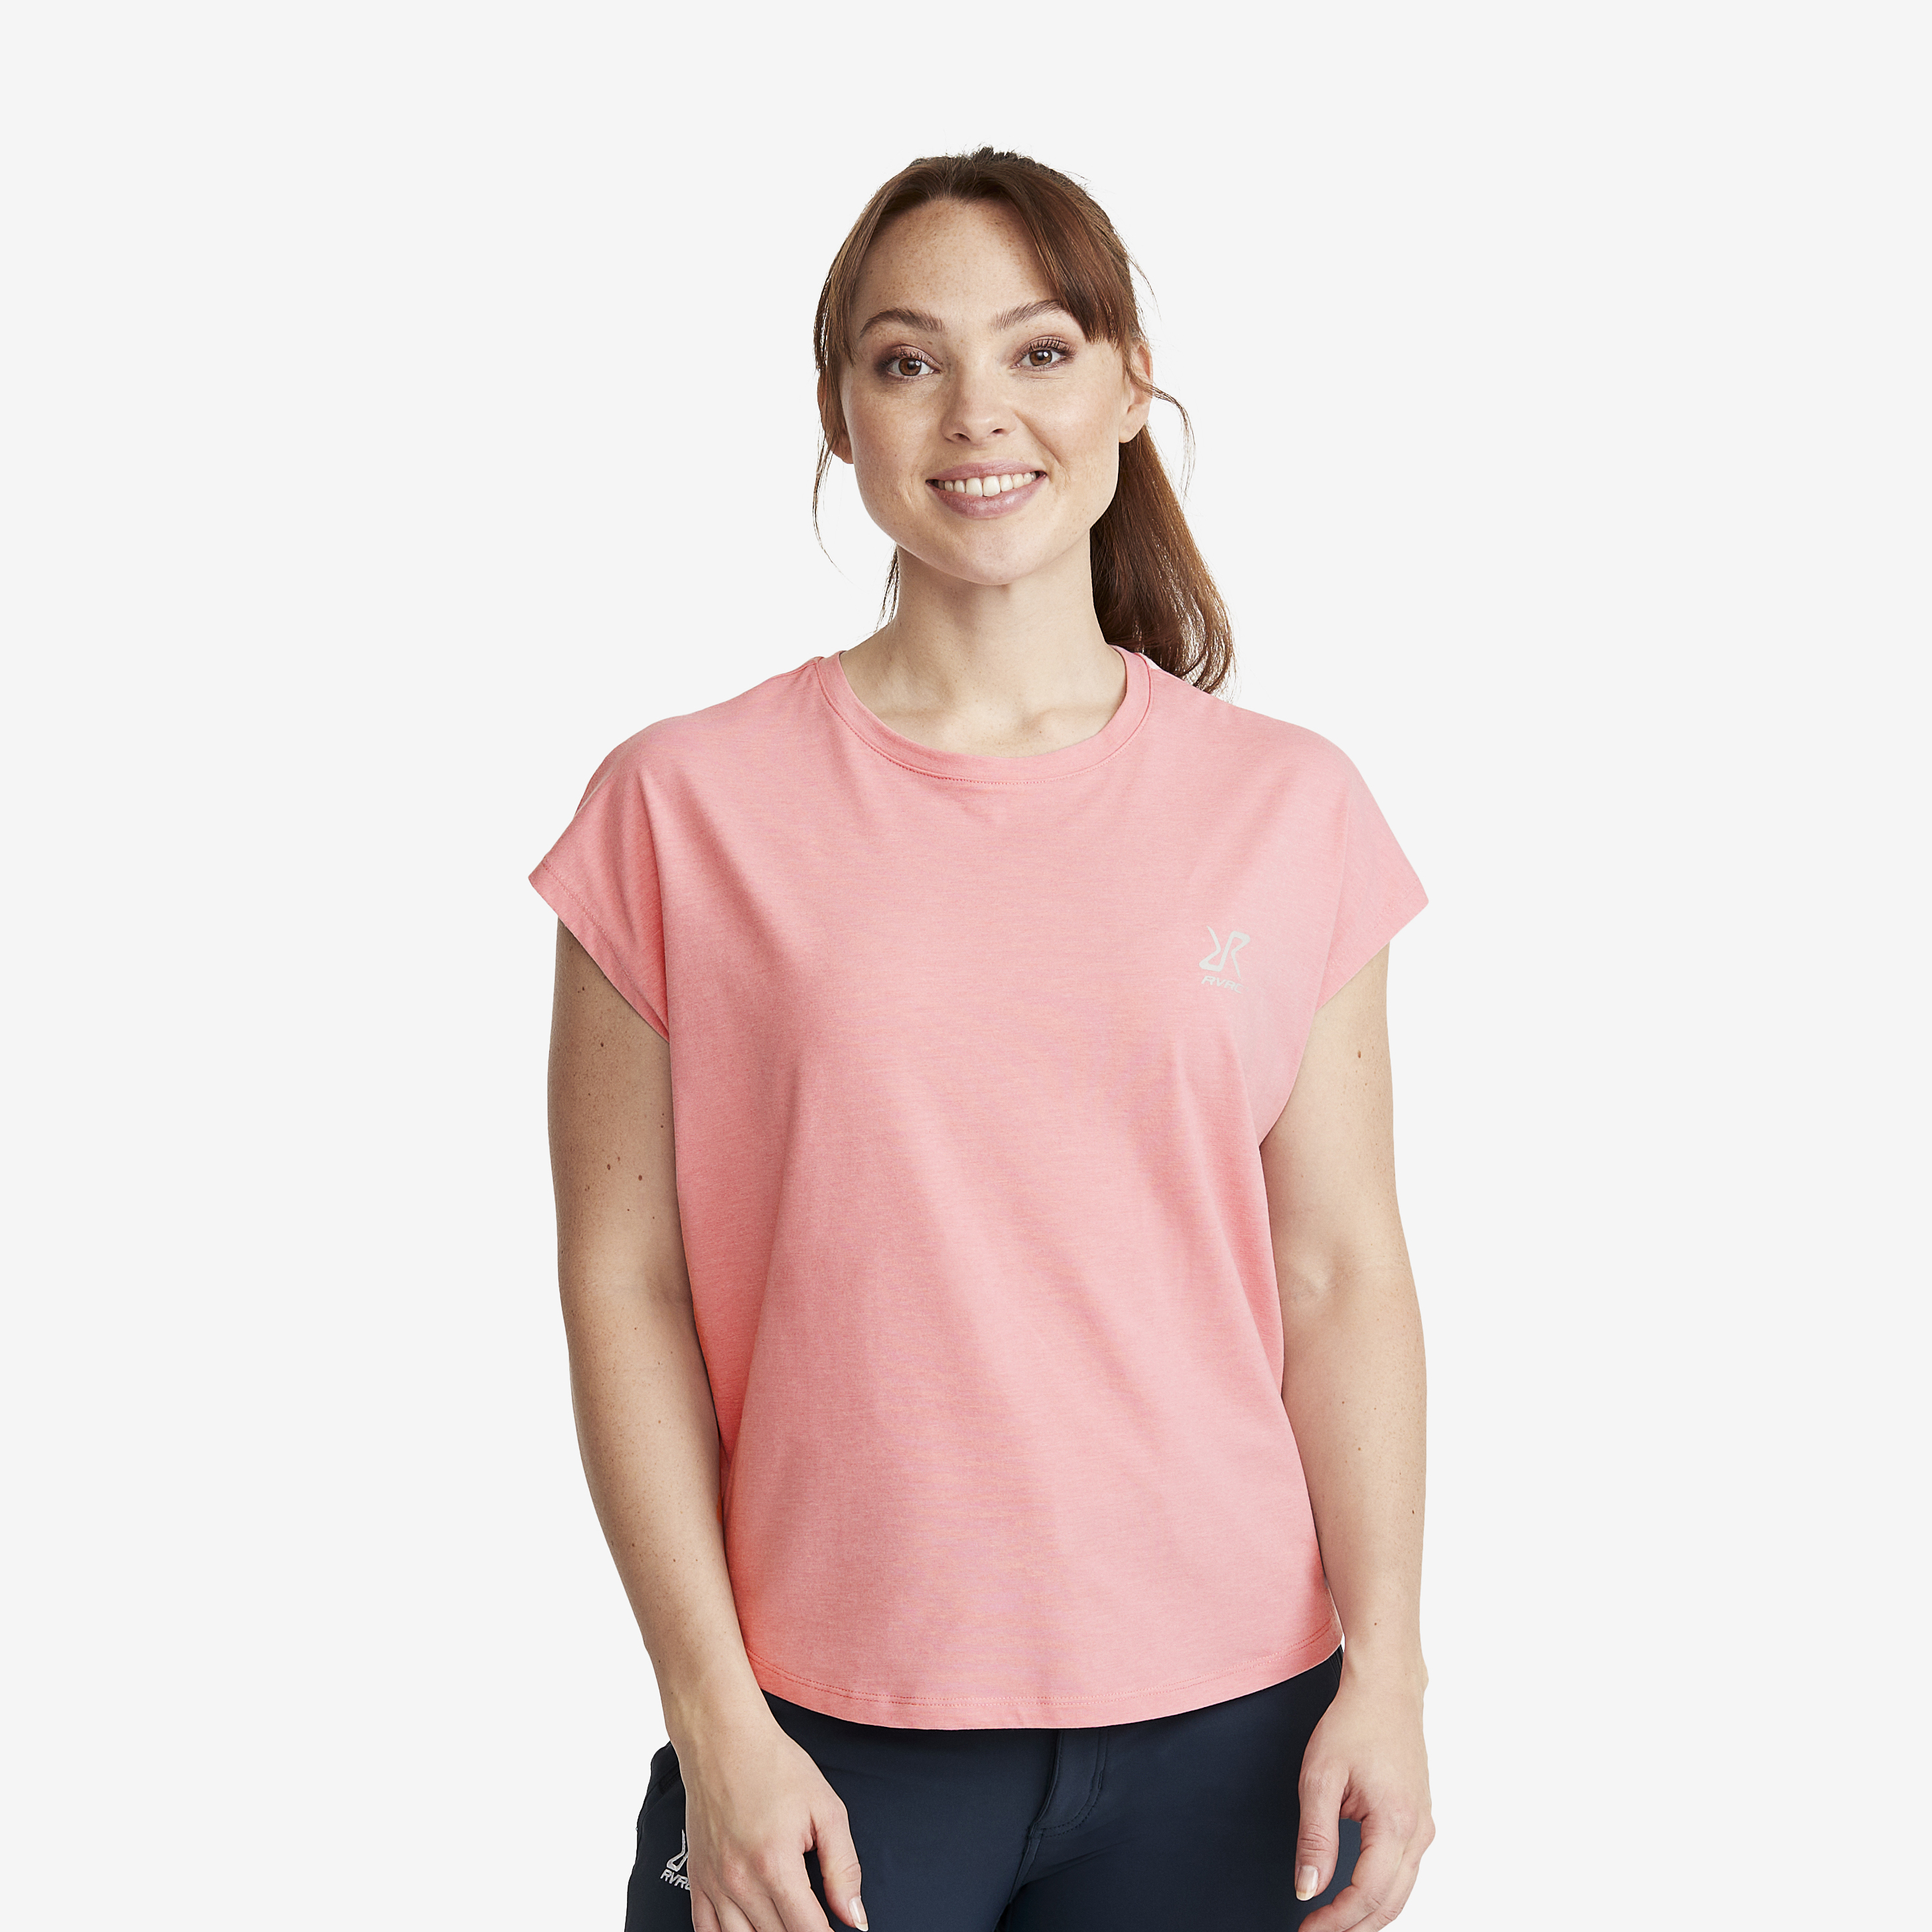 Soft Sleeveless Top - Dam - Dusty Pink, Storlek:M - Dam > Tröjor > T-shirts